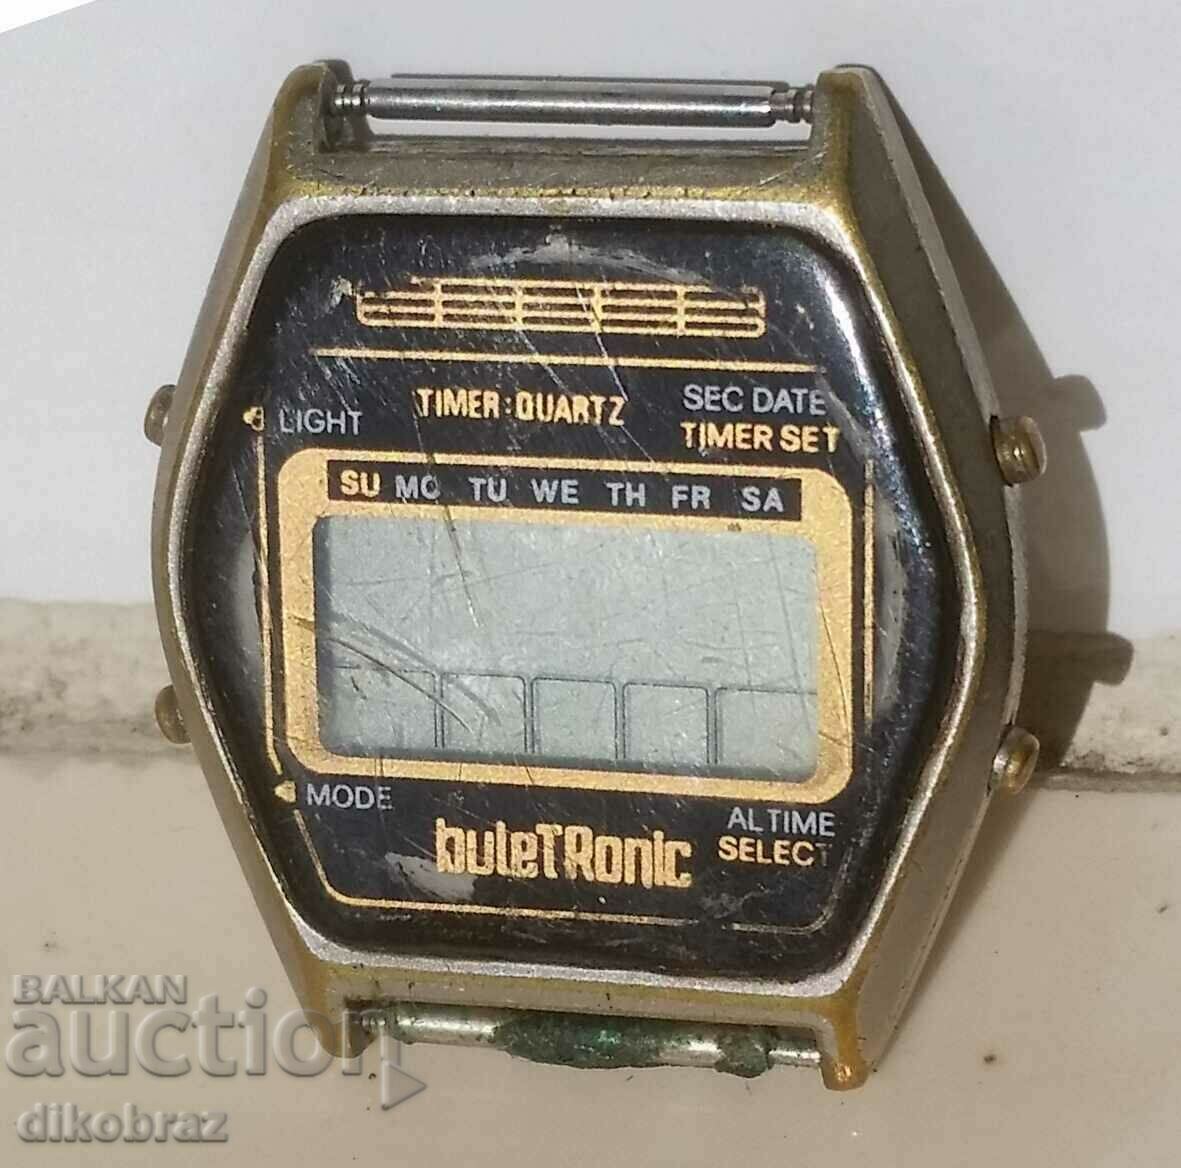 Buletronic Buletronic 14 συνεδριακό ρολόι χειρός DKMS 1982